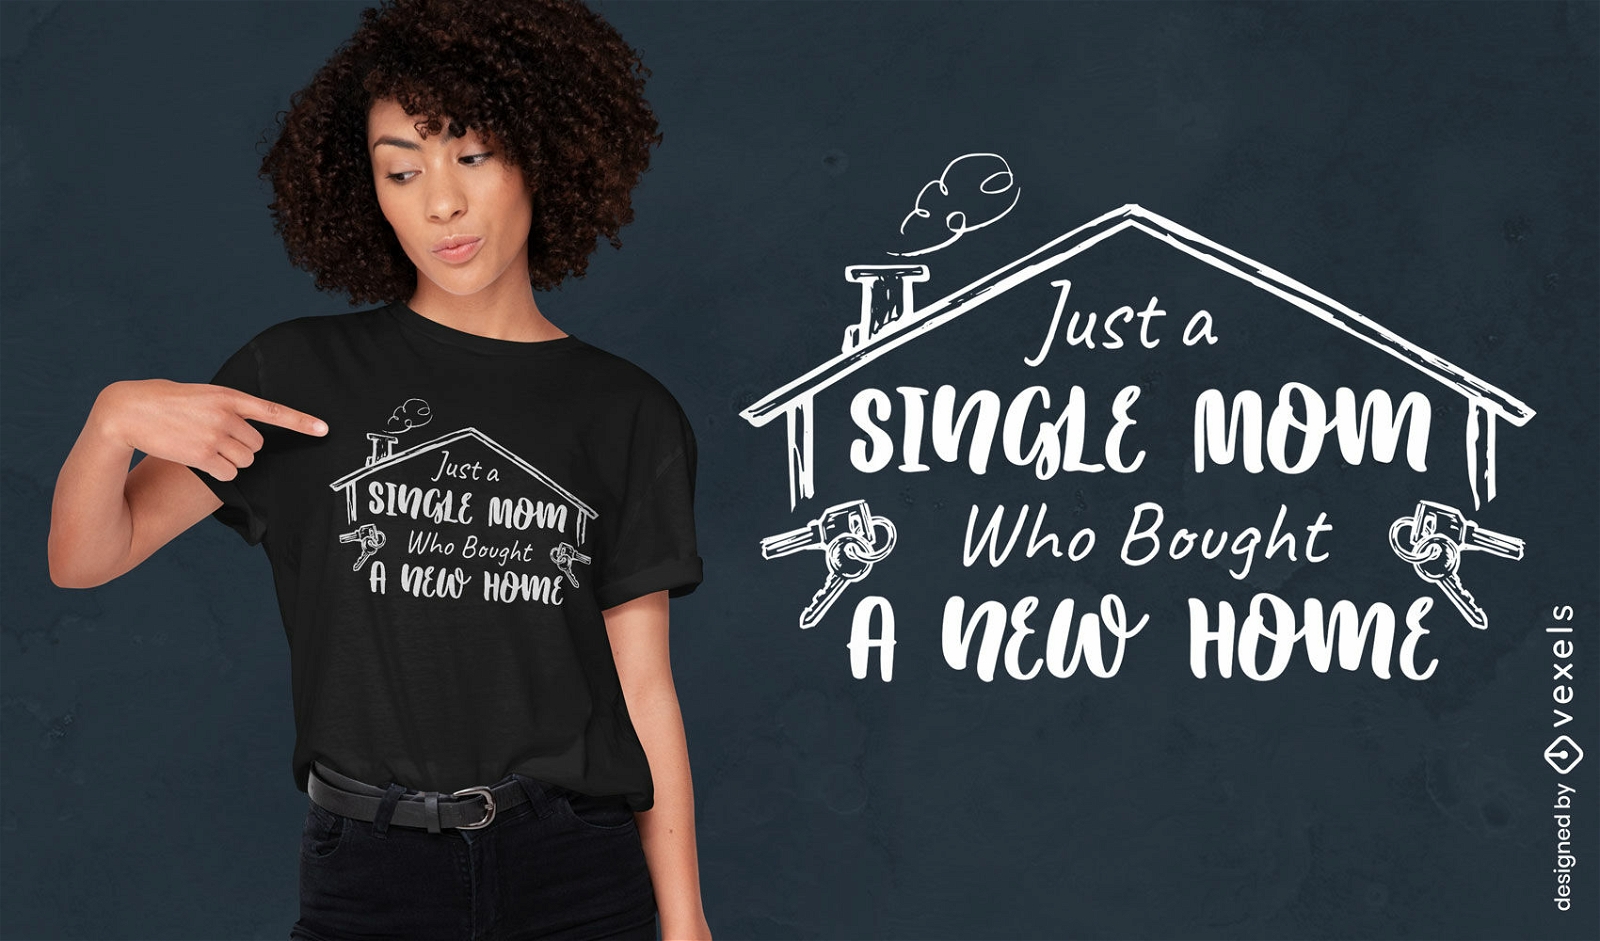 Single mom new house t-shirt design